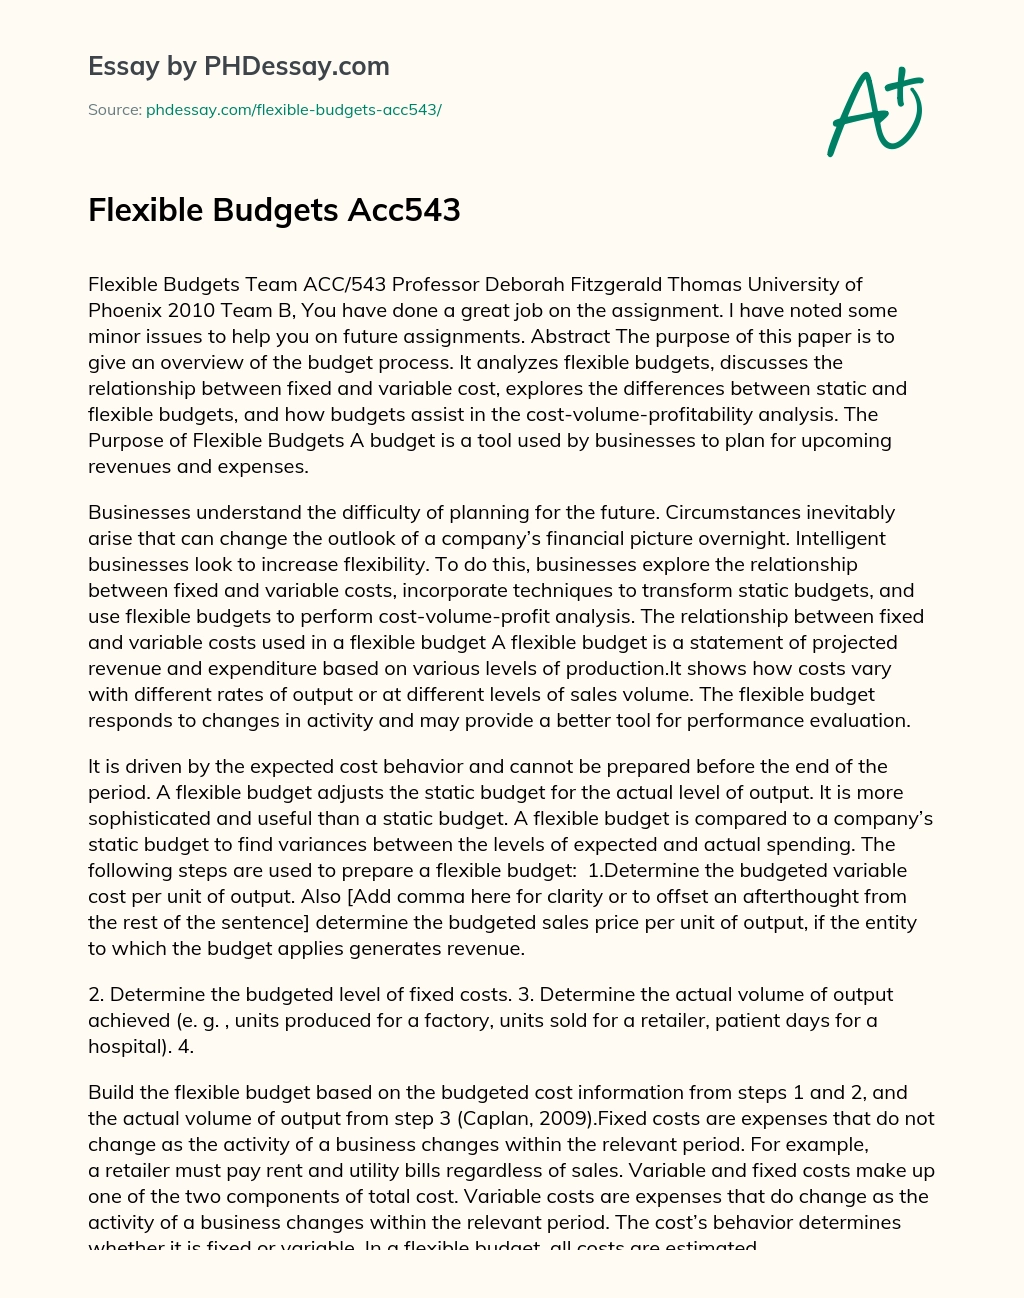 Flexible Budgets Acc543 essay